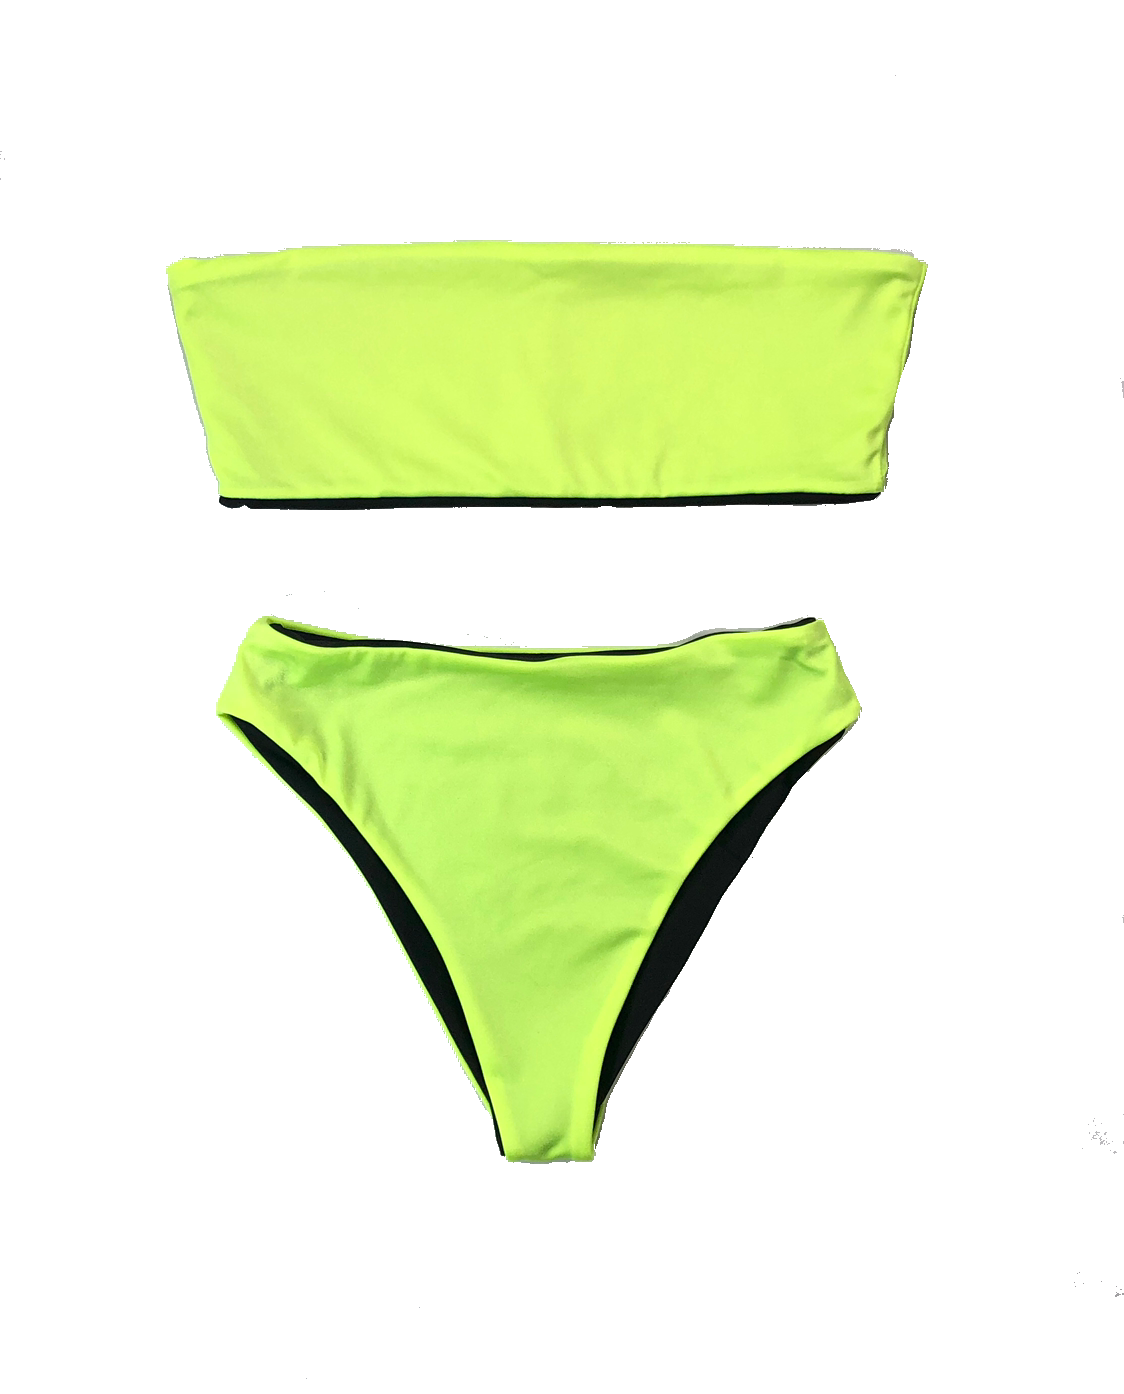 wendolin-designs - Wendolin Designs -  - Reversible Neon Green And Black Bandeau Bikini Top - Strapless Swimsuit Top